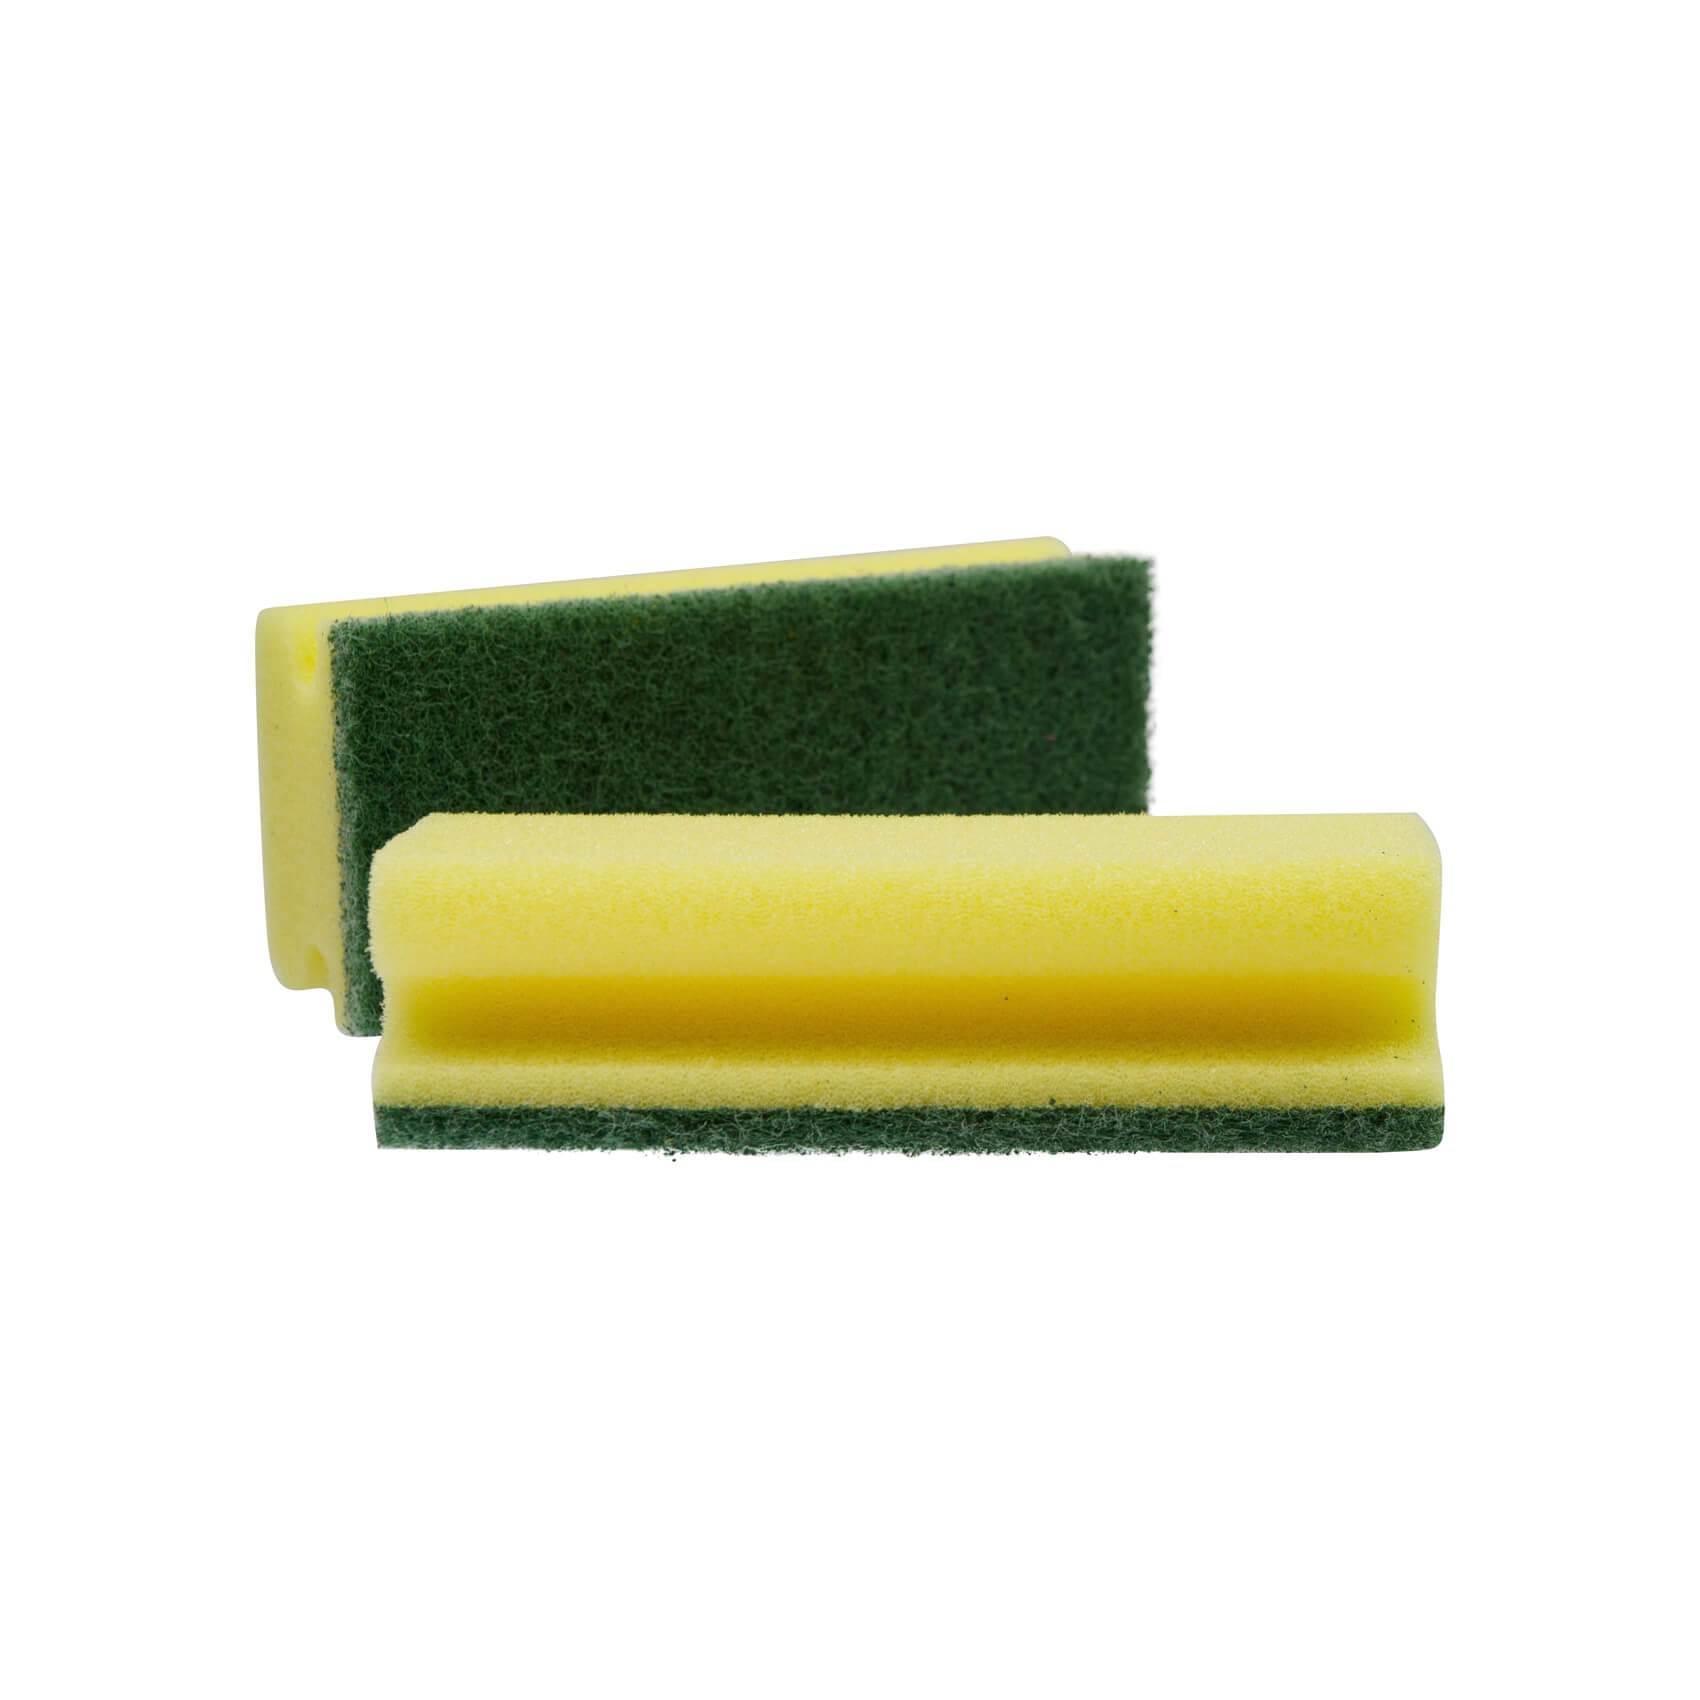 Rengøringssvamp/skuresvamp, gul m. grøn skureflade, 10 stk.